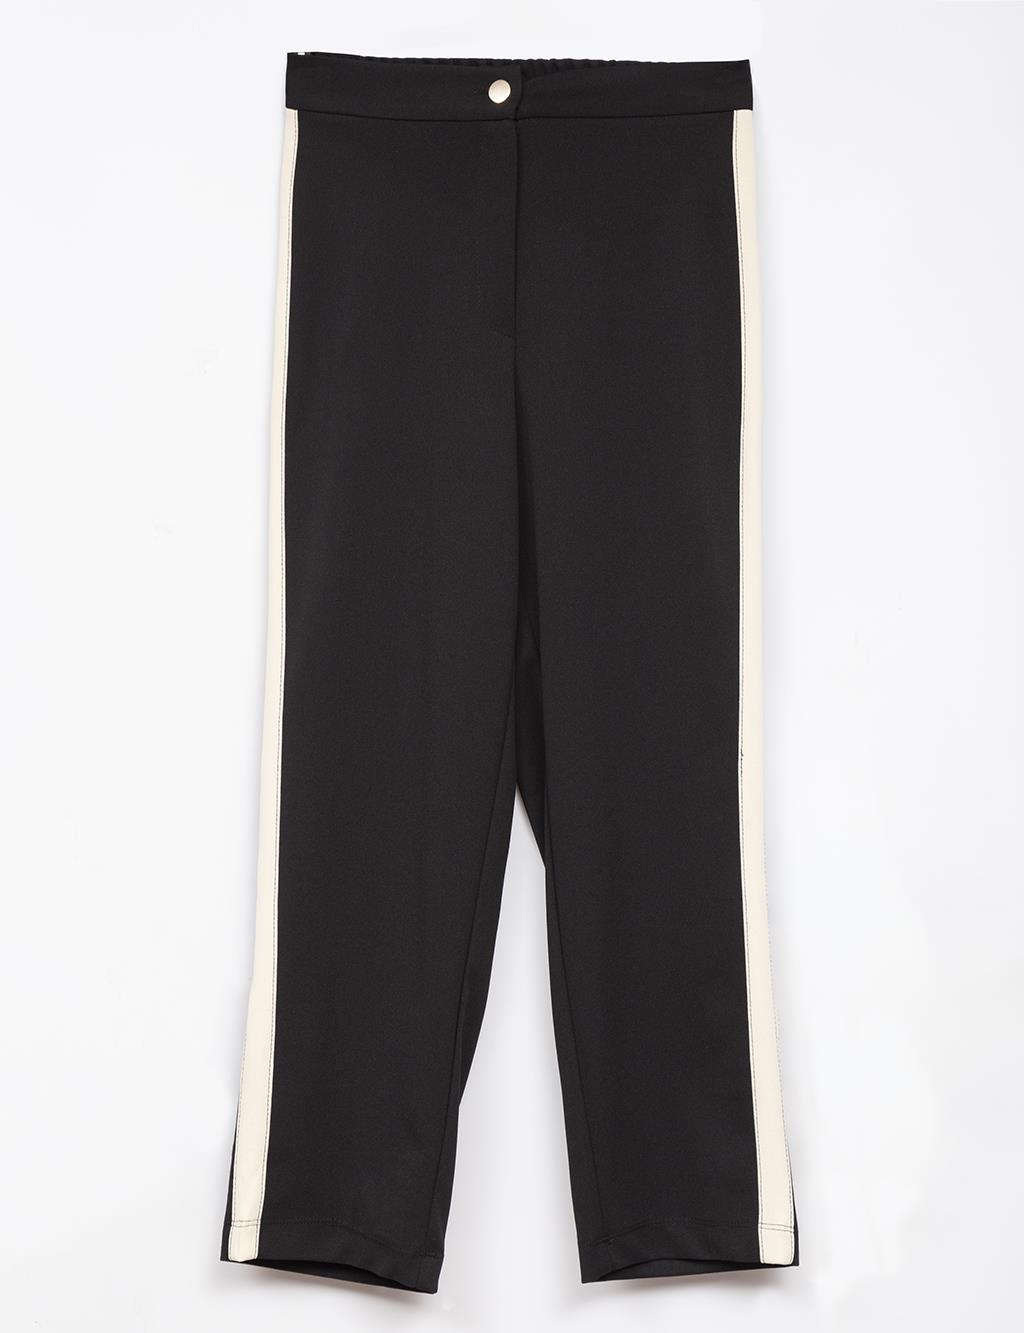 Elastic Waist with Side Stripe Detail Pants in Black